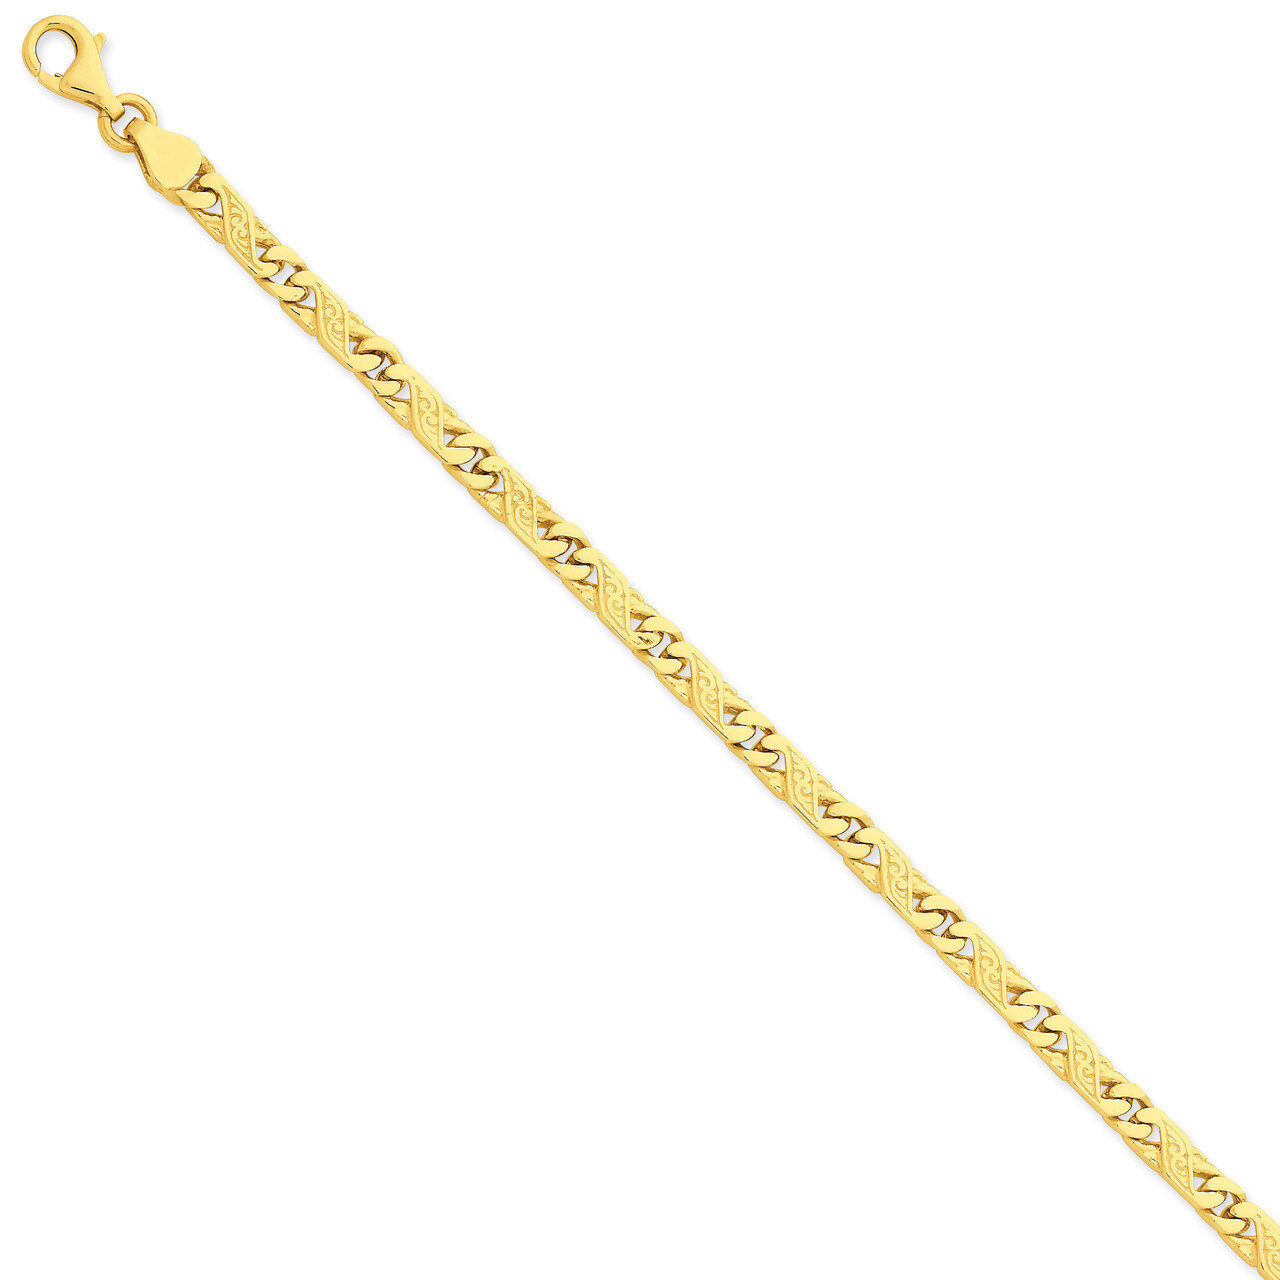 5mm Hand-Polished Fancy Link Chain 9 Inch 14k Gold LK161-9